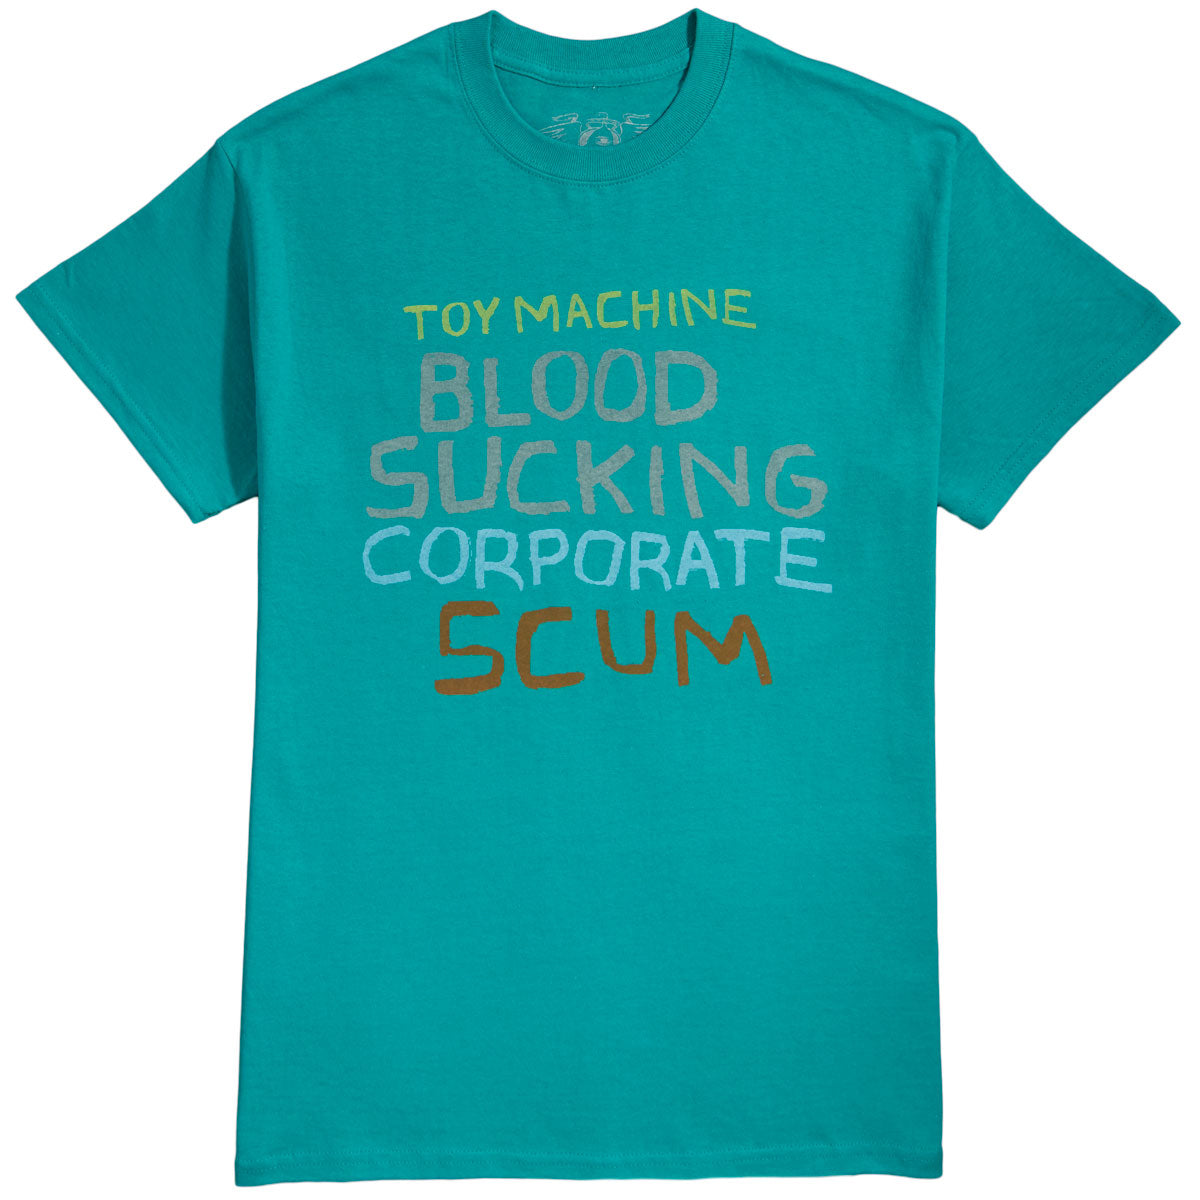 Toy Machine Bloodsucking Scum T-Shirt - Jade image 1